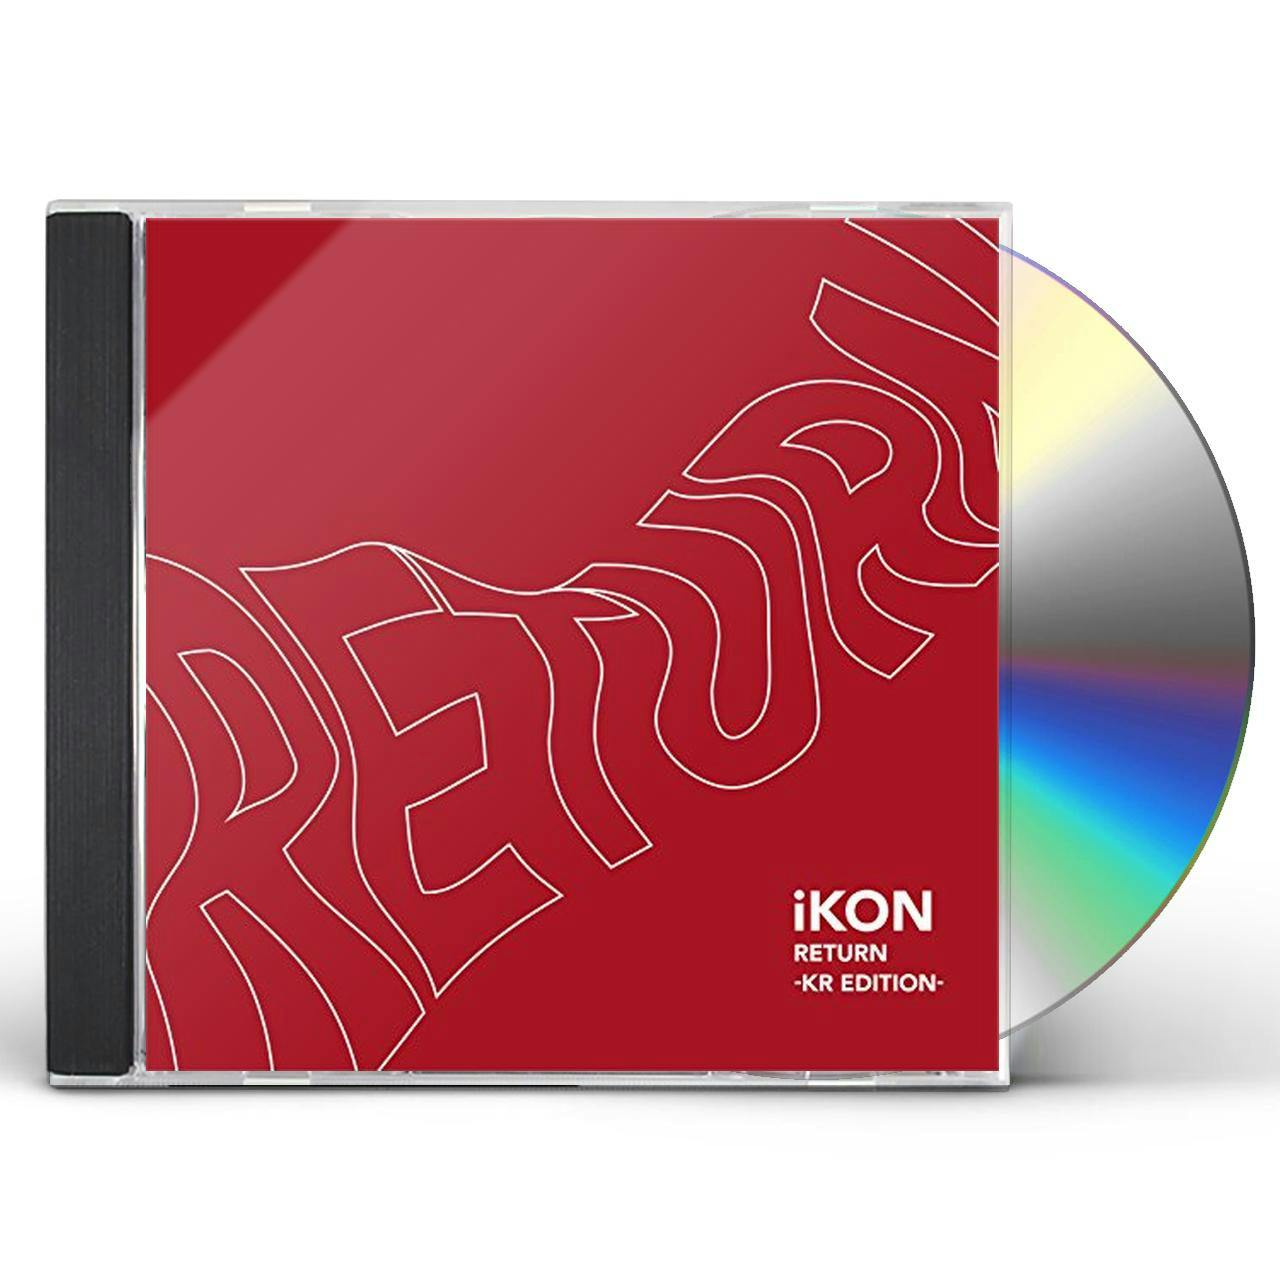 iKON RETURN -KR EDITION- CD